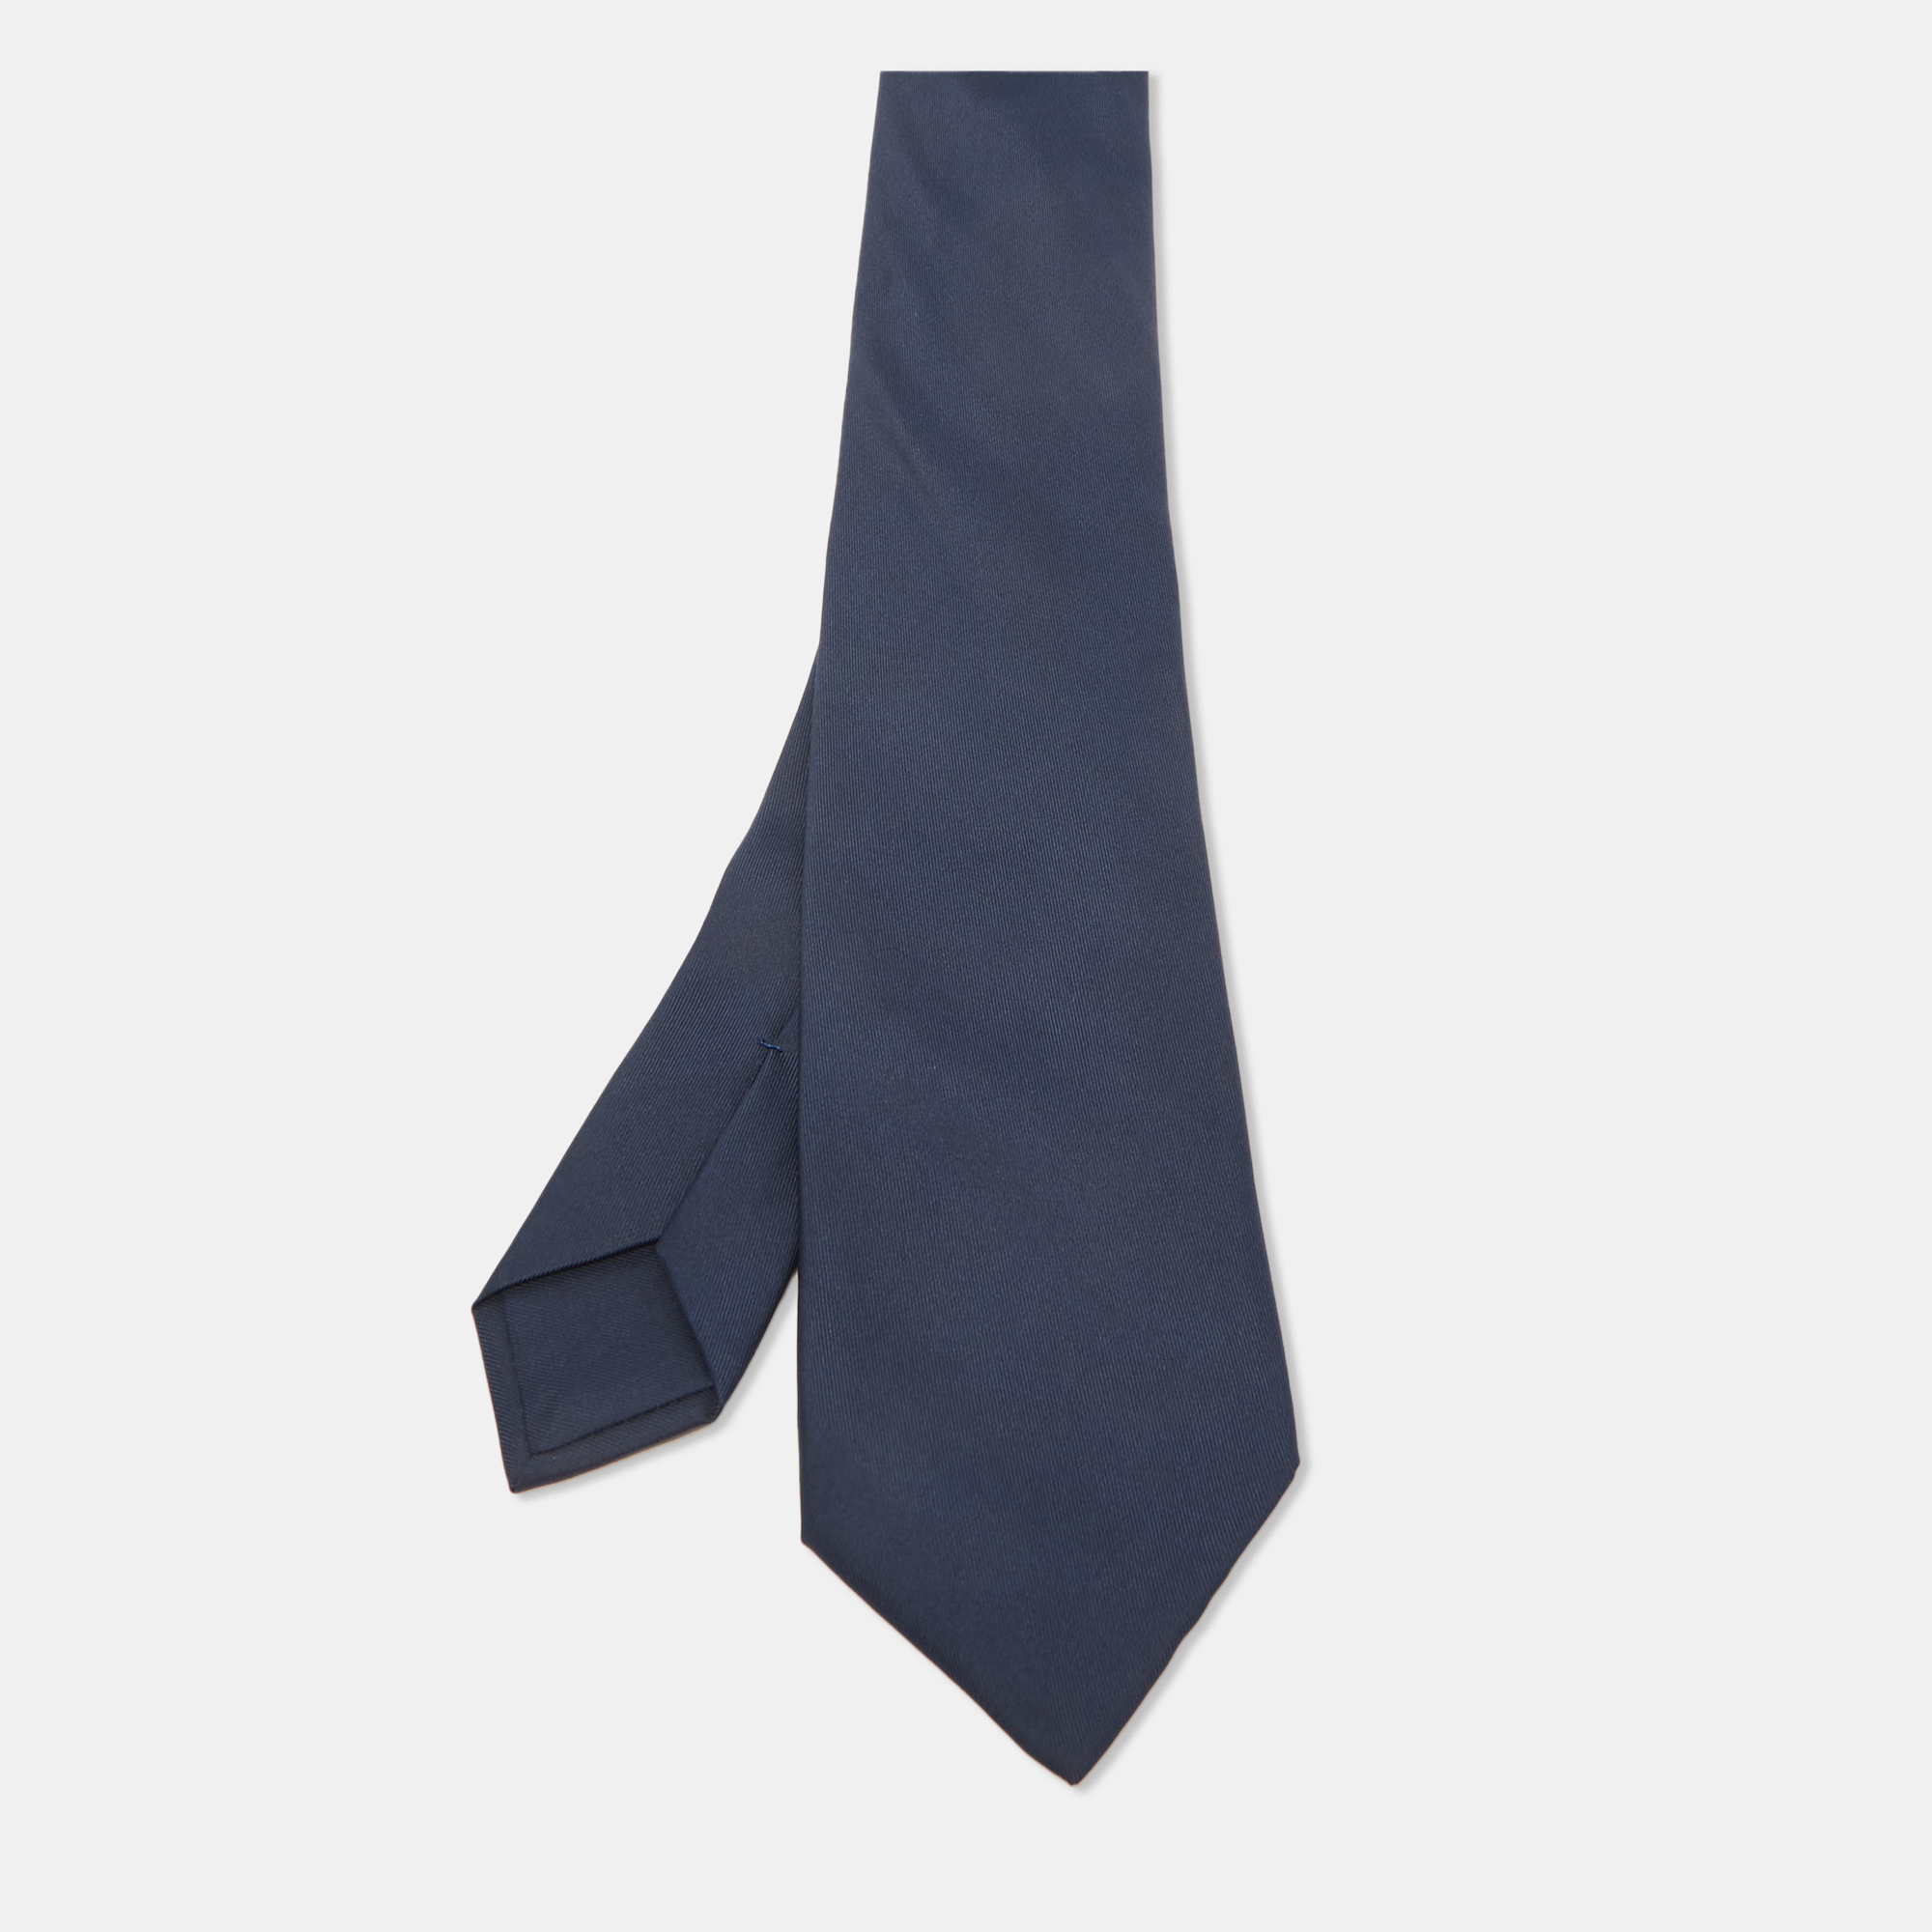 Hermes herm&egrave;s navy blue solid silk tie